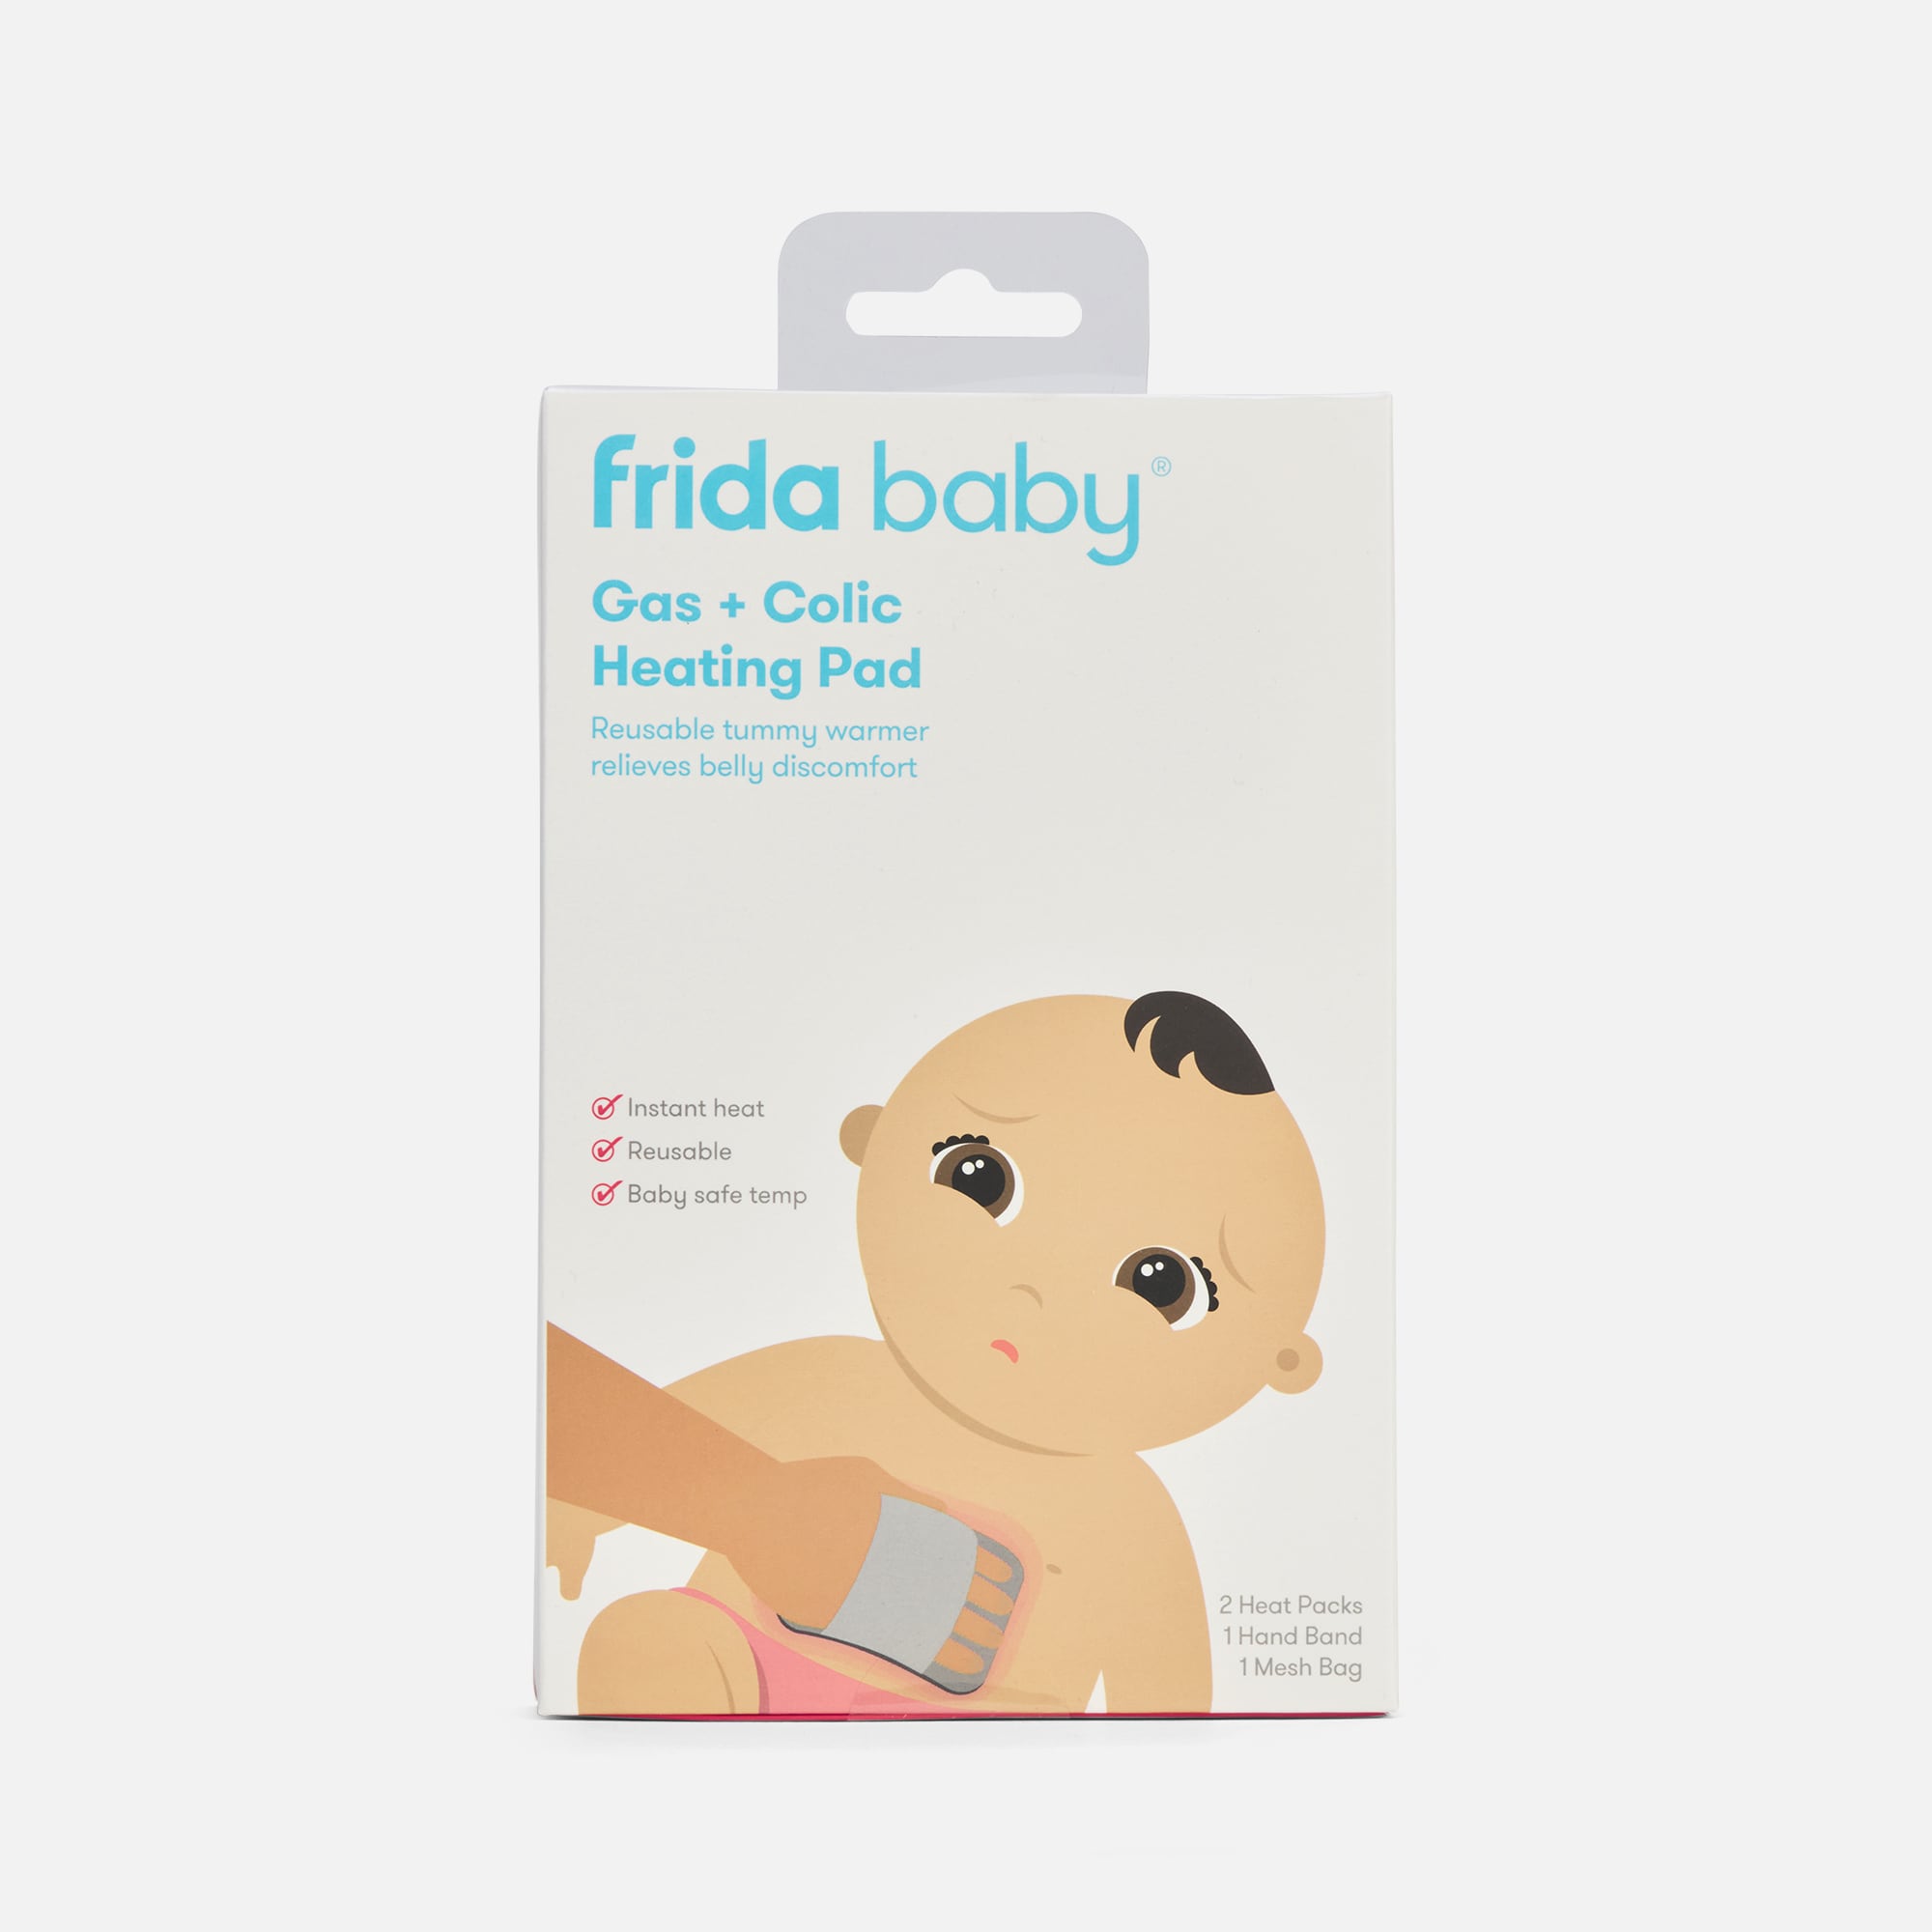 Frida Baby Gas + Colic Heating Pad